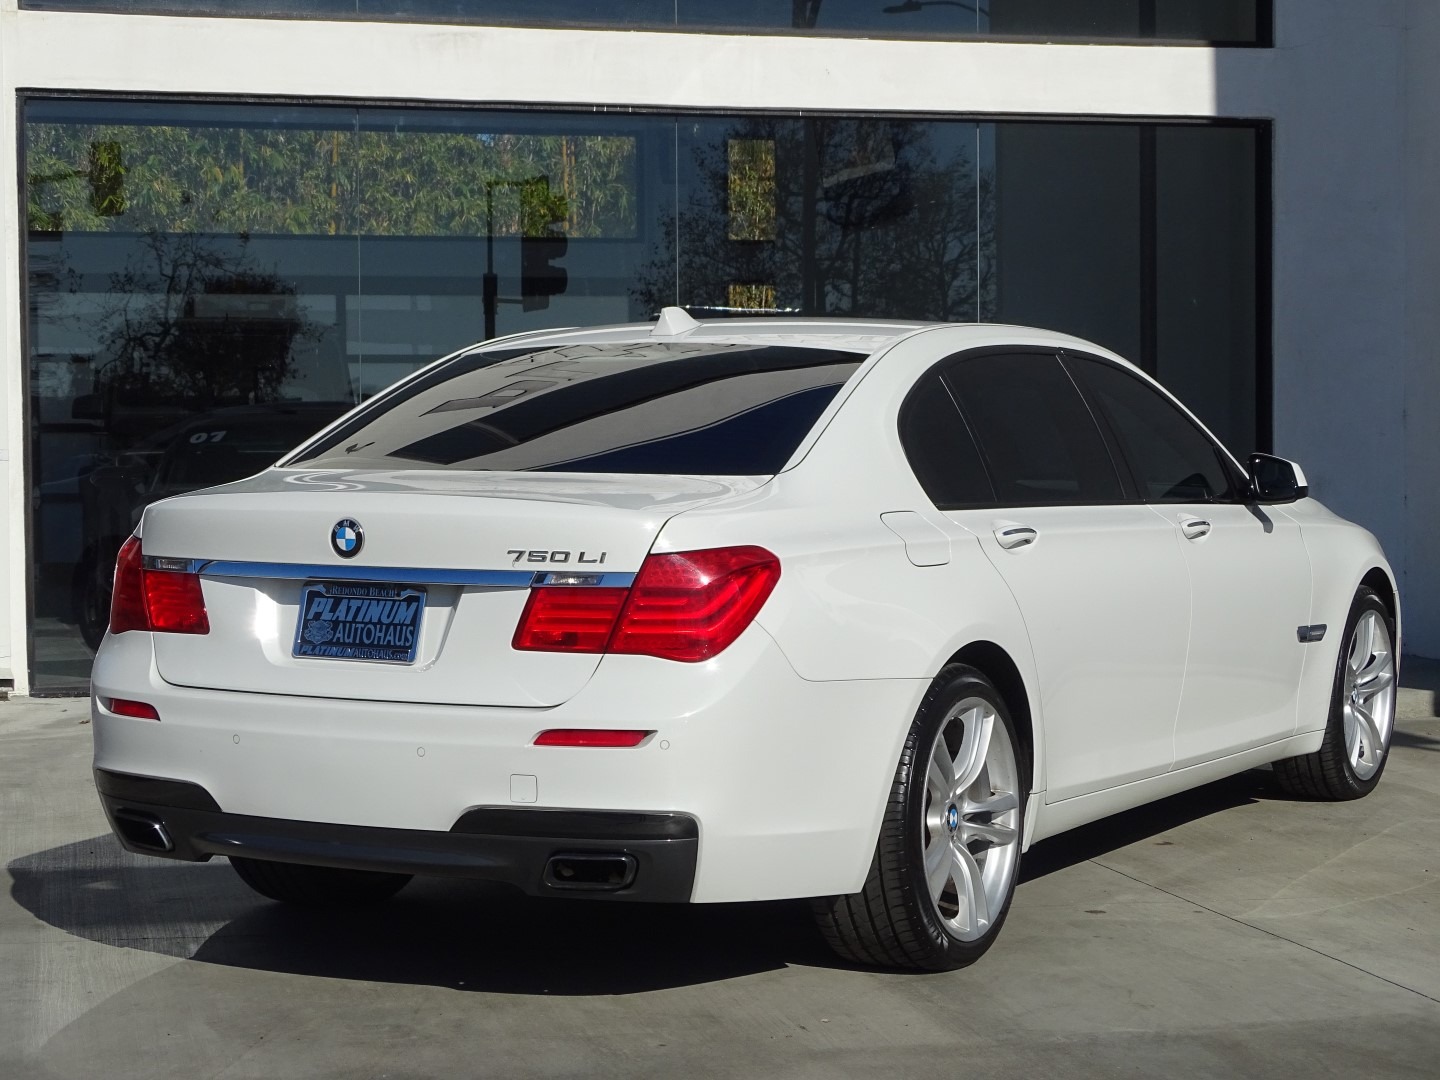 2012 BMW 7 Series 750Li Stock # 6269 for sale near Redondo Beach, CA